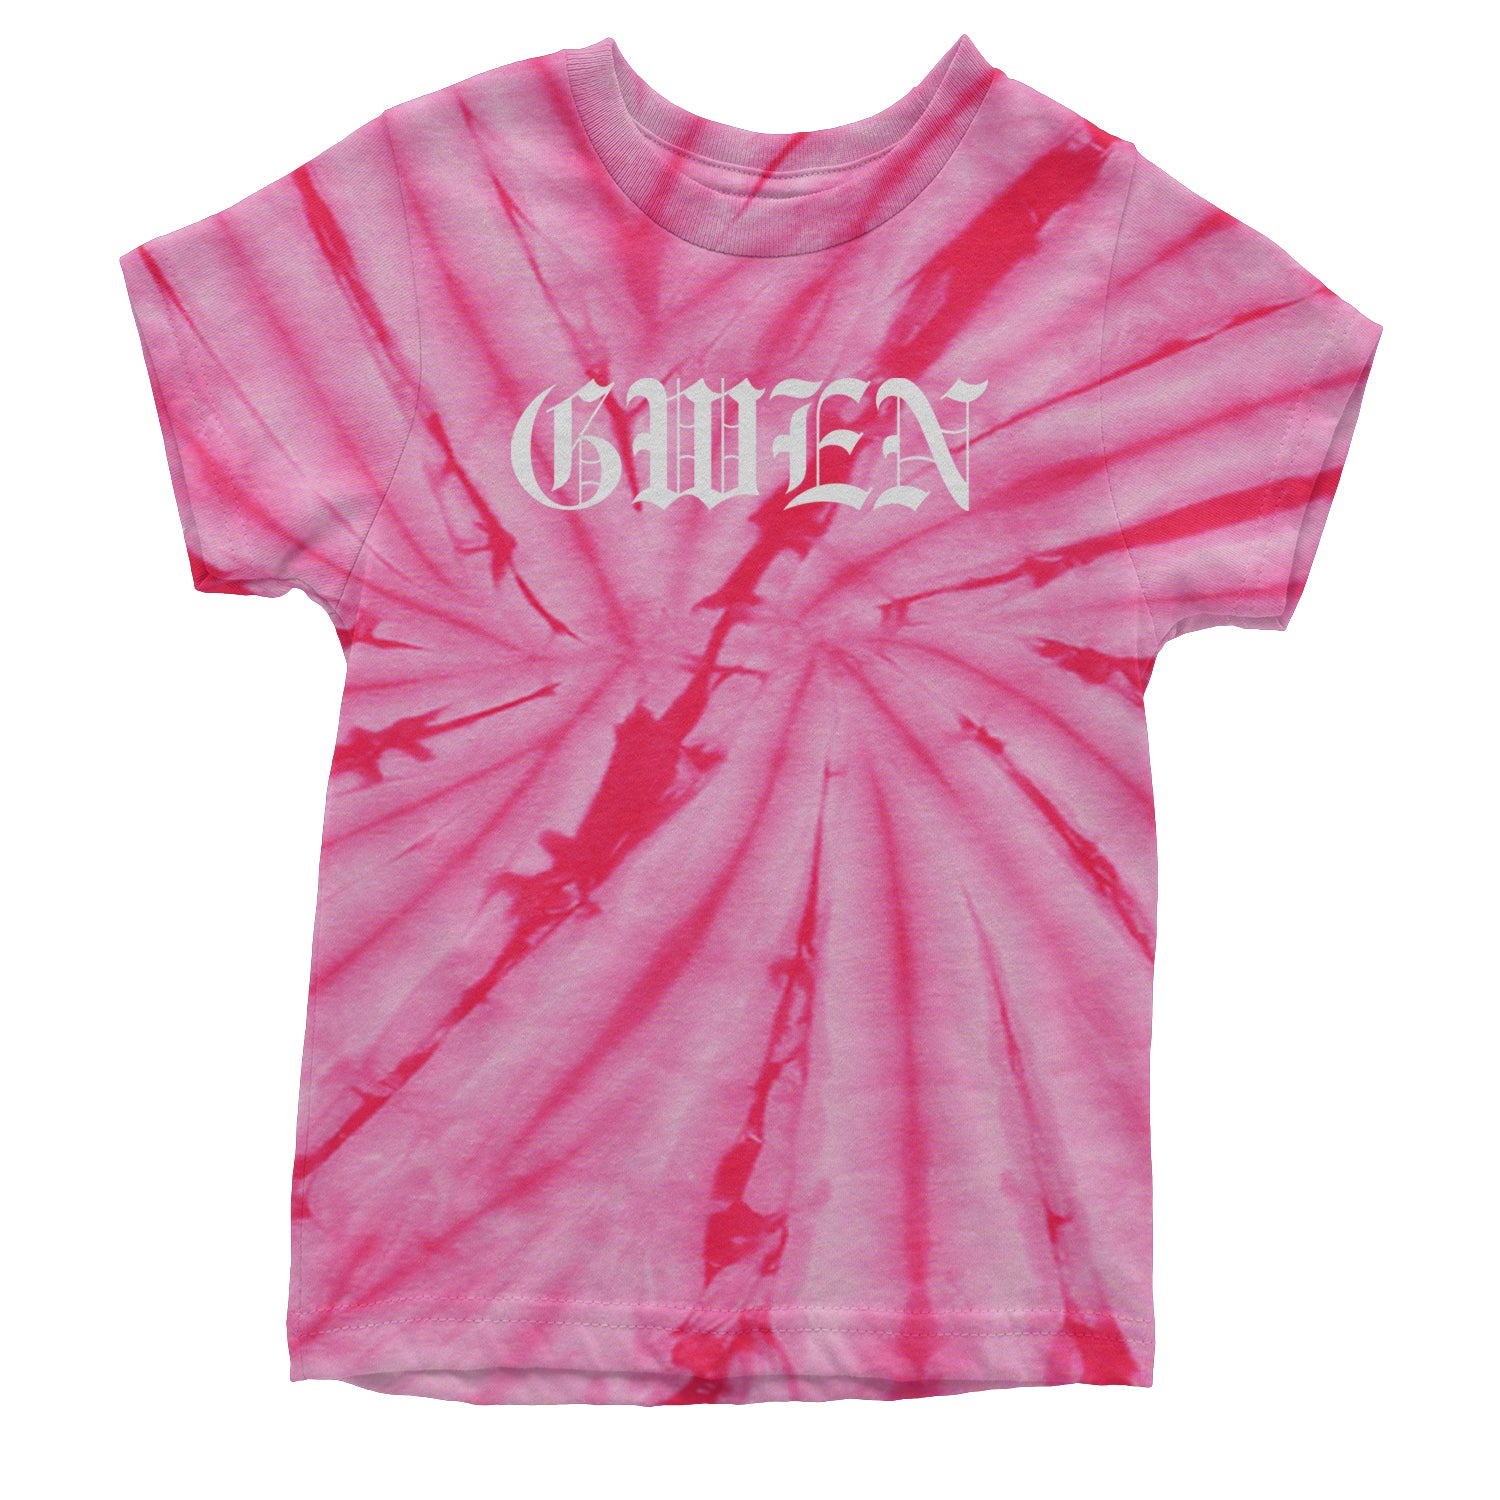 Gwen 90's Y2K Throwback Grunge Ska Youth T-shirt